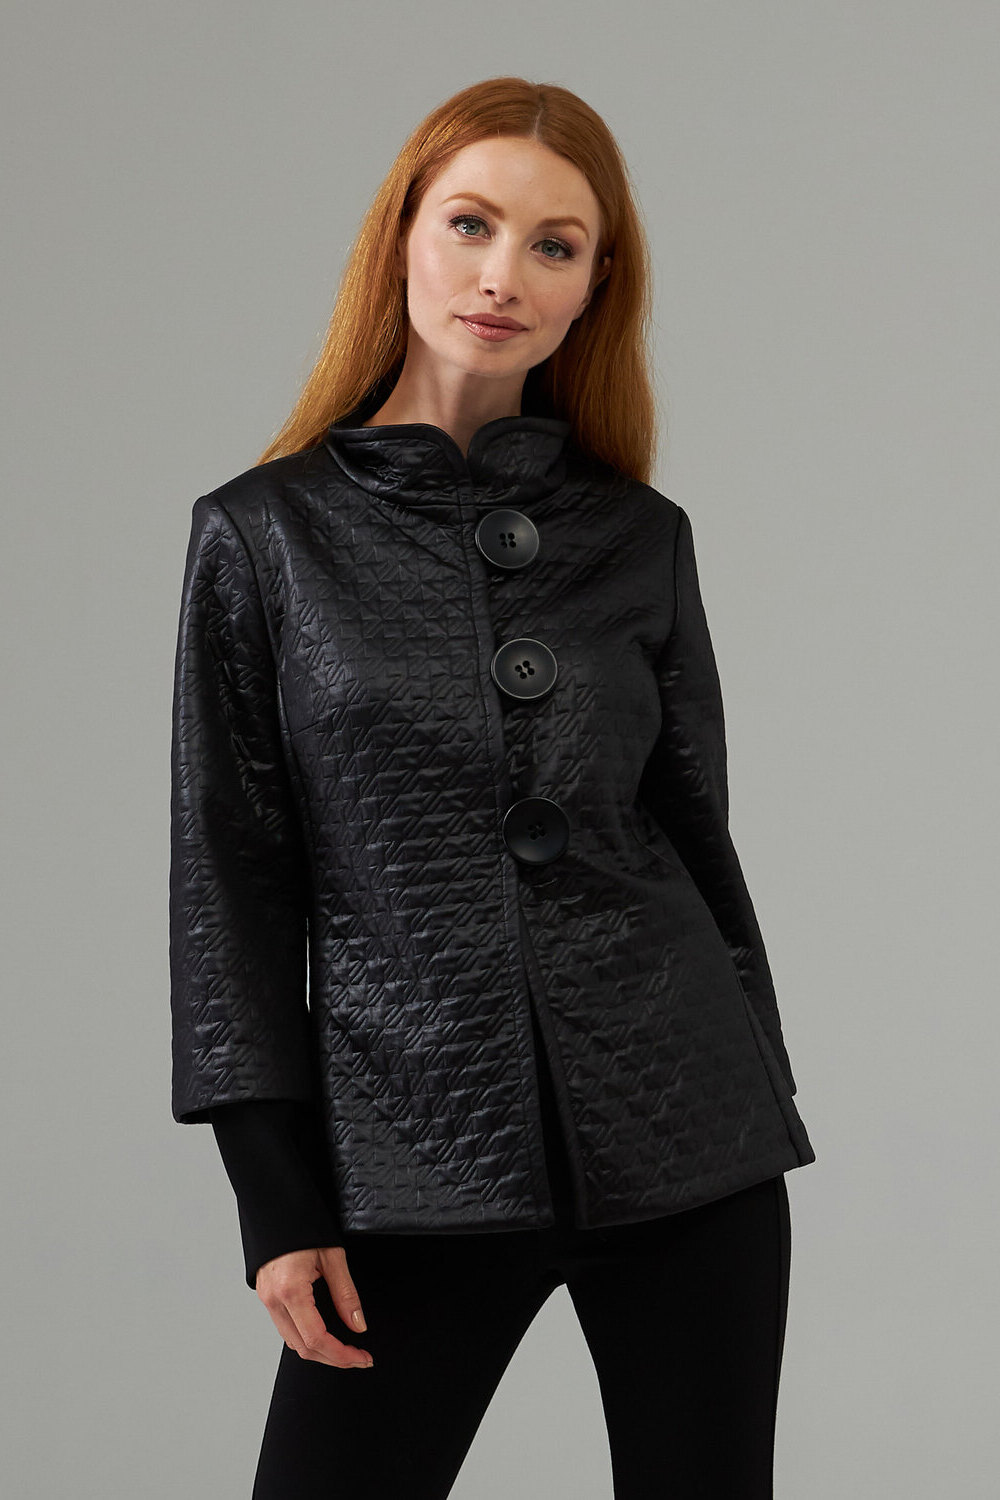 Joseph Ribkoff Faux leather high collar jacket style 203633. Black